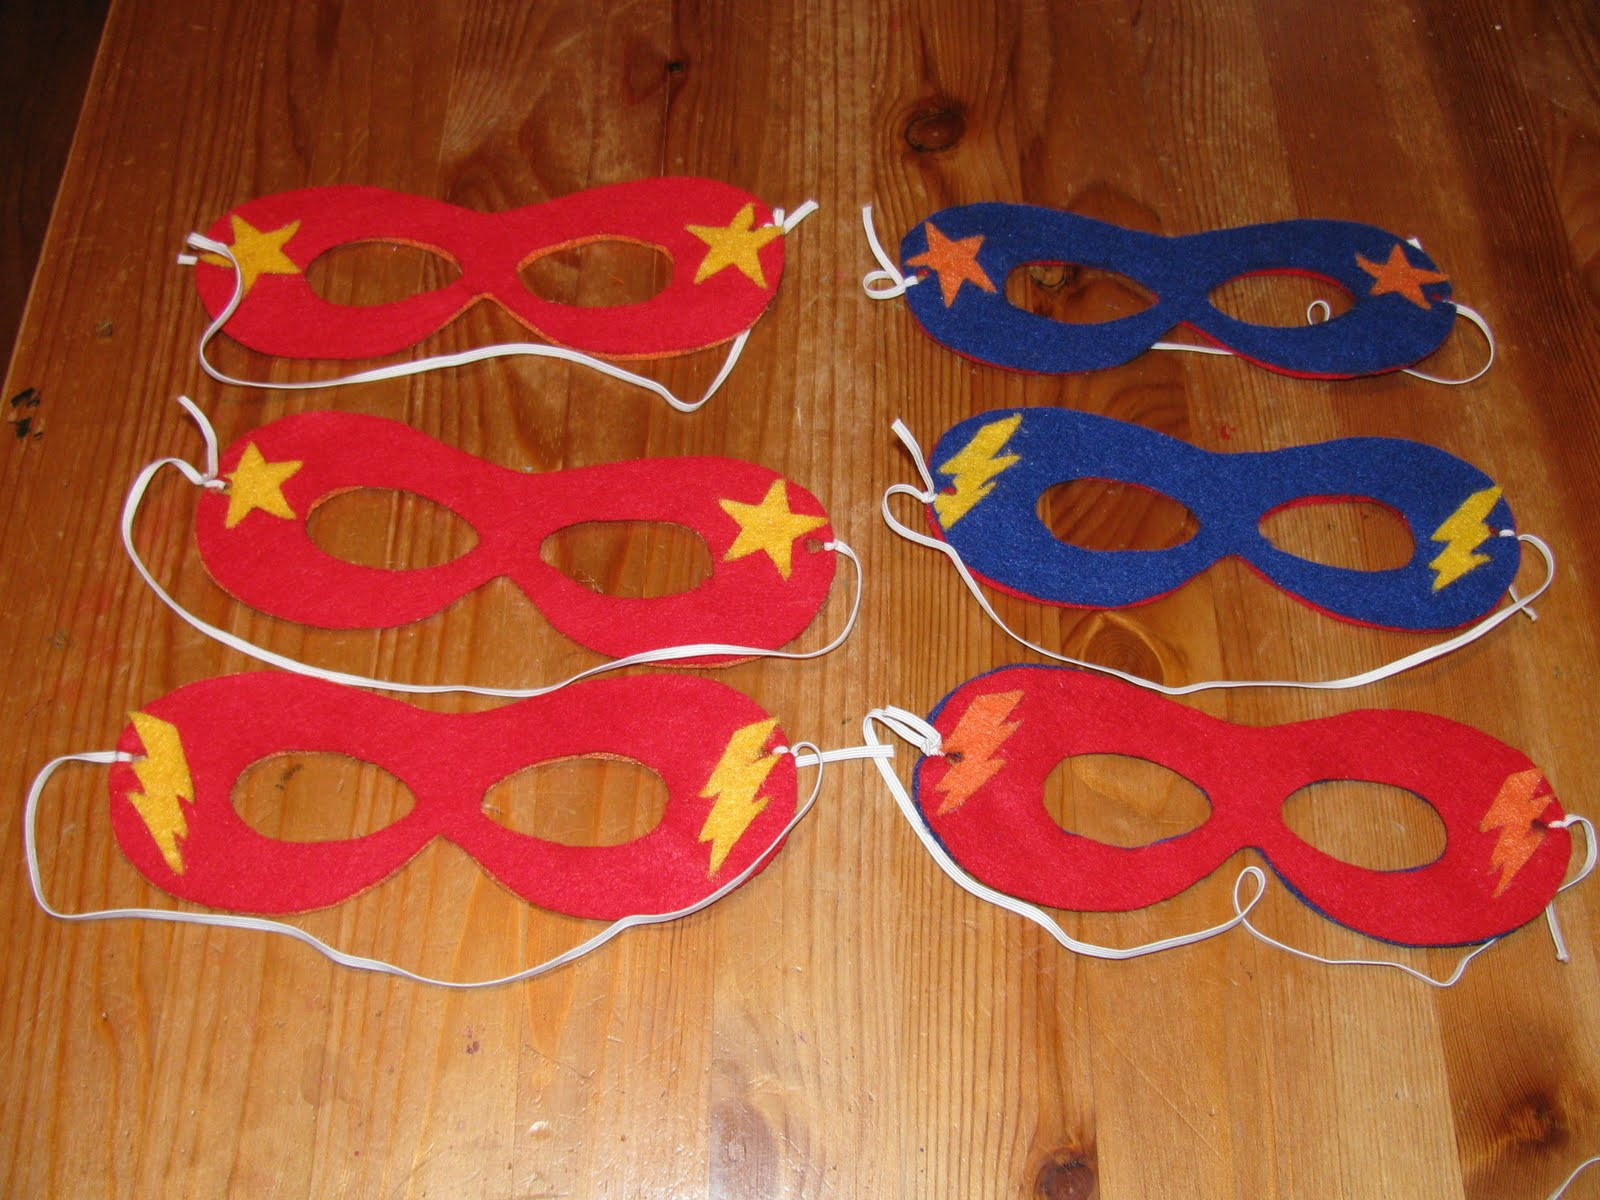 Best ideas about DIY Superhero Masks
. Save or Pin My Crafty Playground DIY Superhero masks Now.